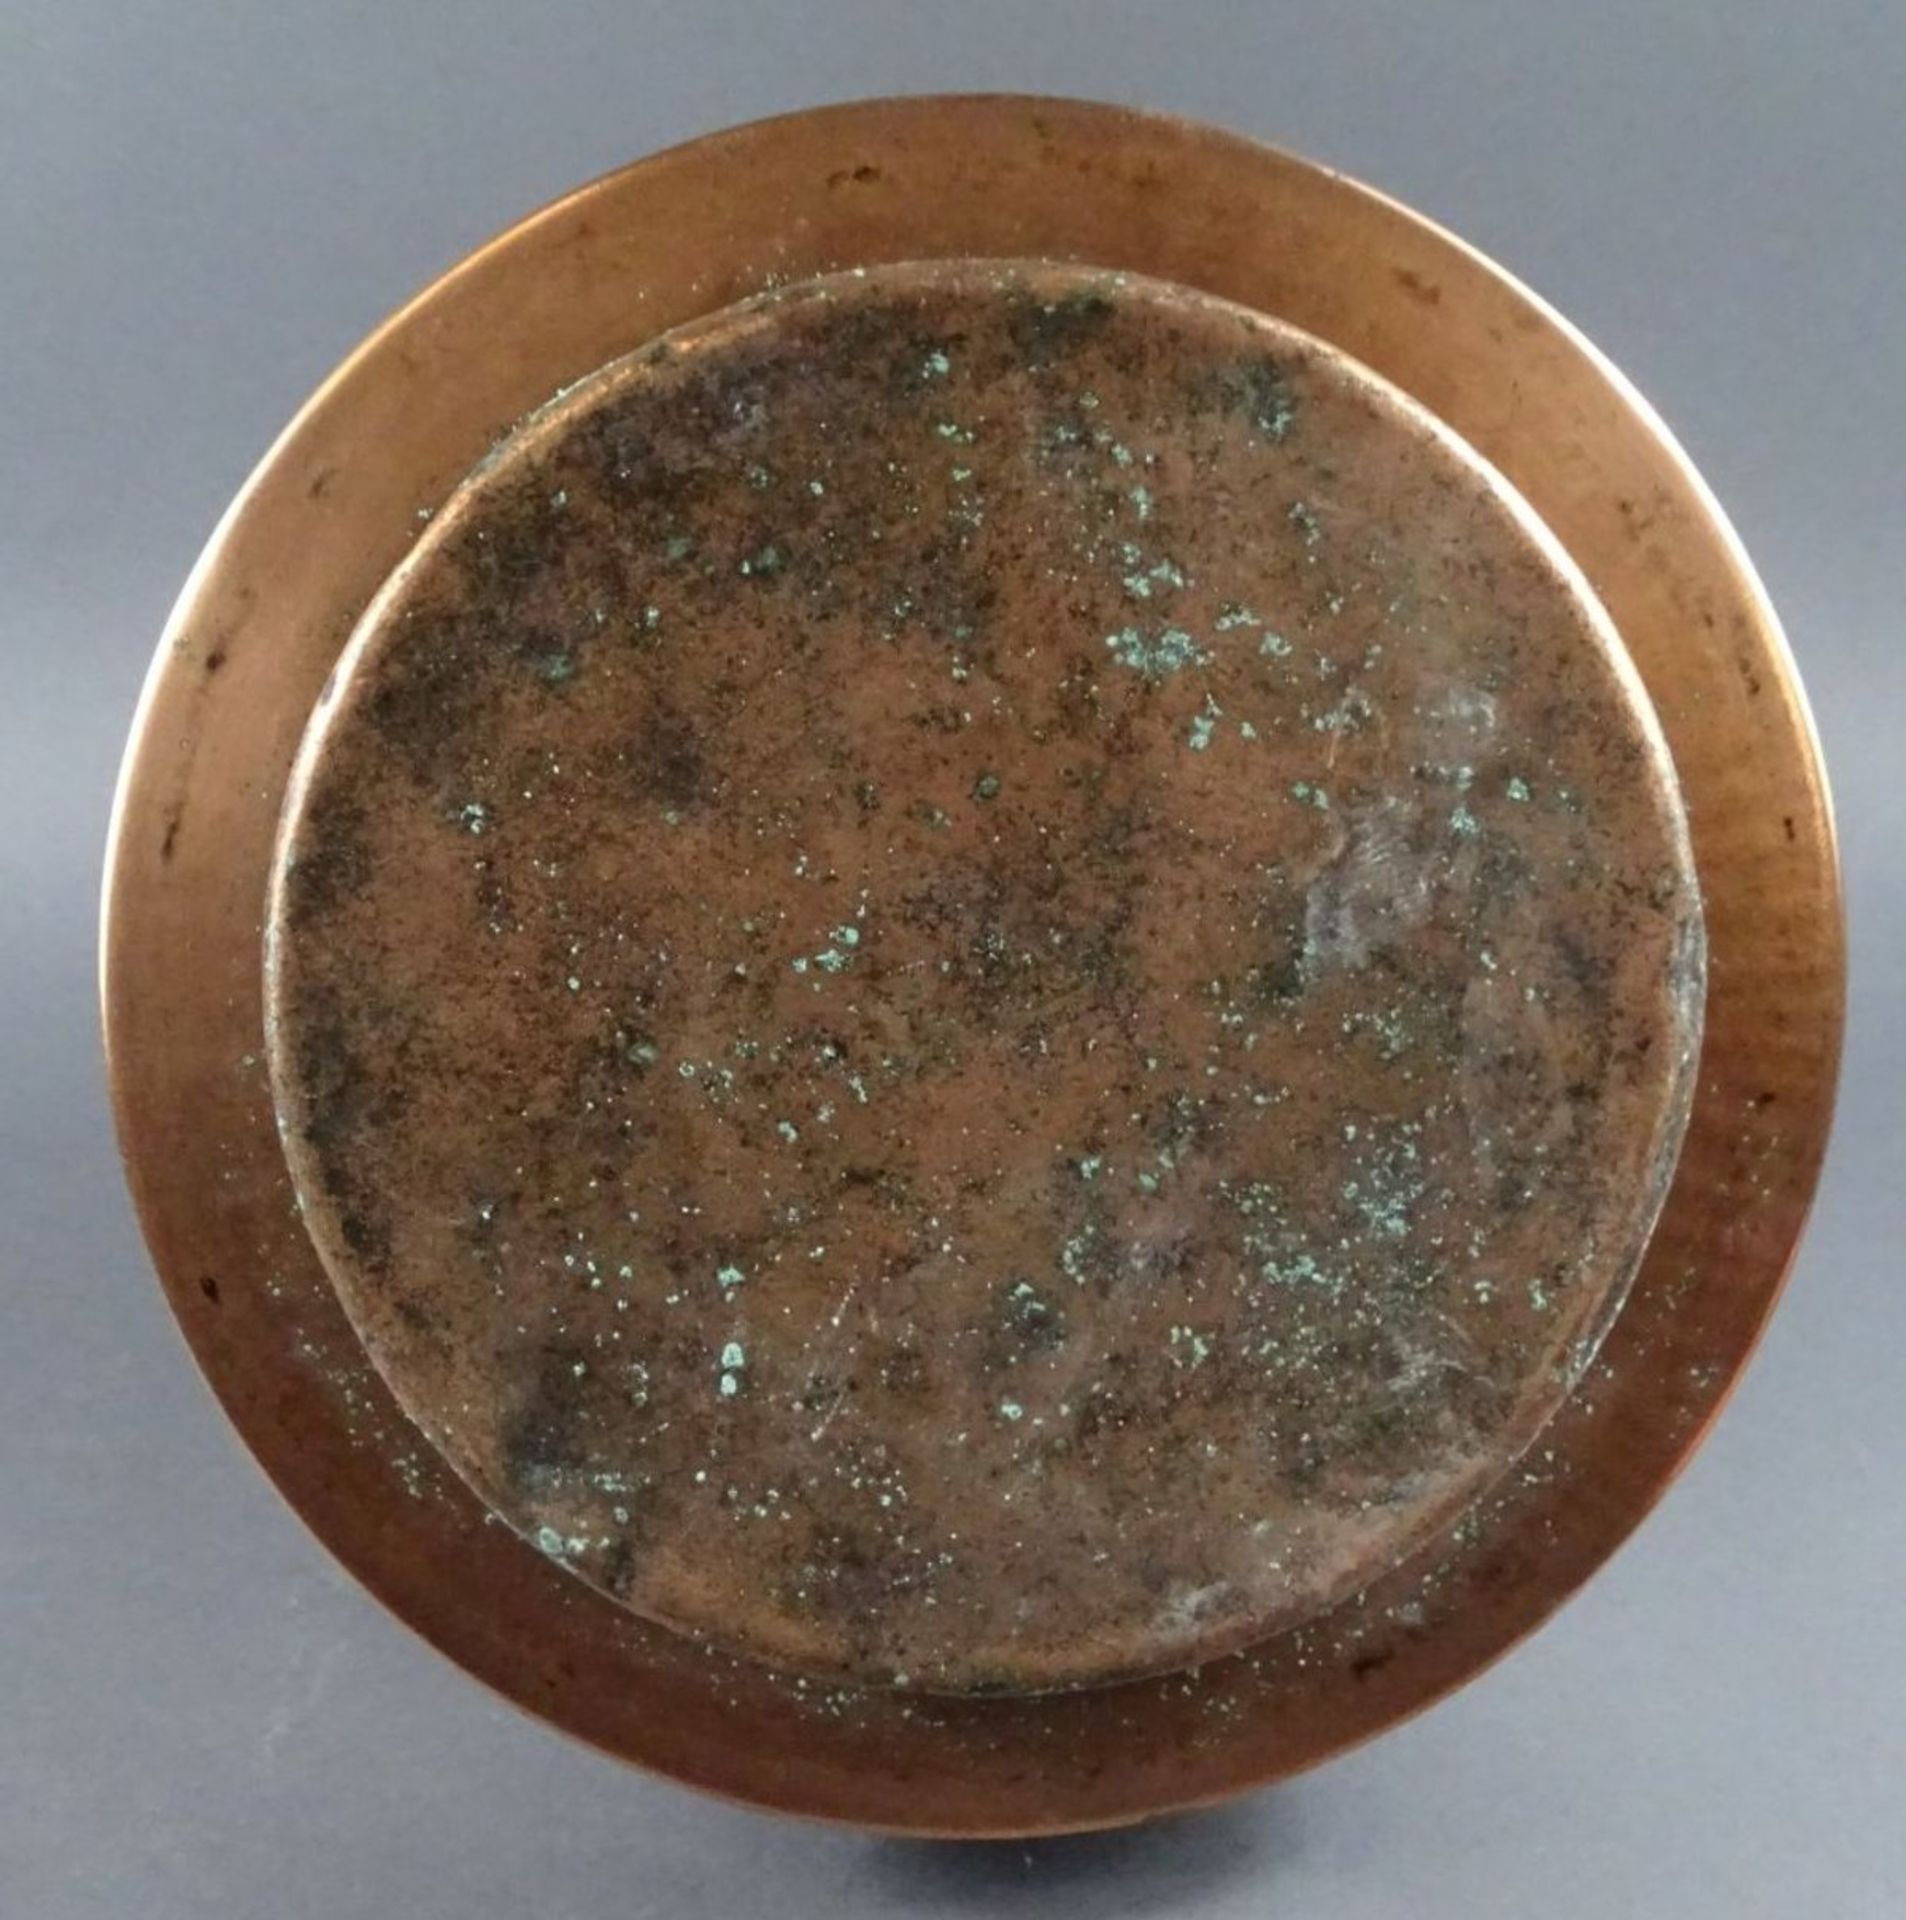 gr. Kupfer-Herdwasserkessel, vernickelt, Holzknauf auf Deckelbekrönung fehlt, H-30 cm, D-28 cm - Image 7 of 7